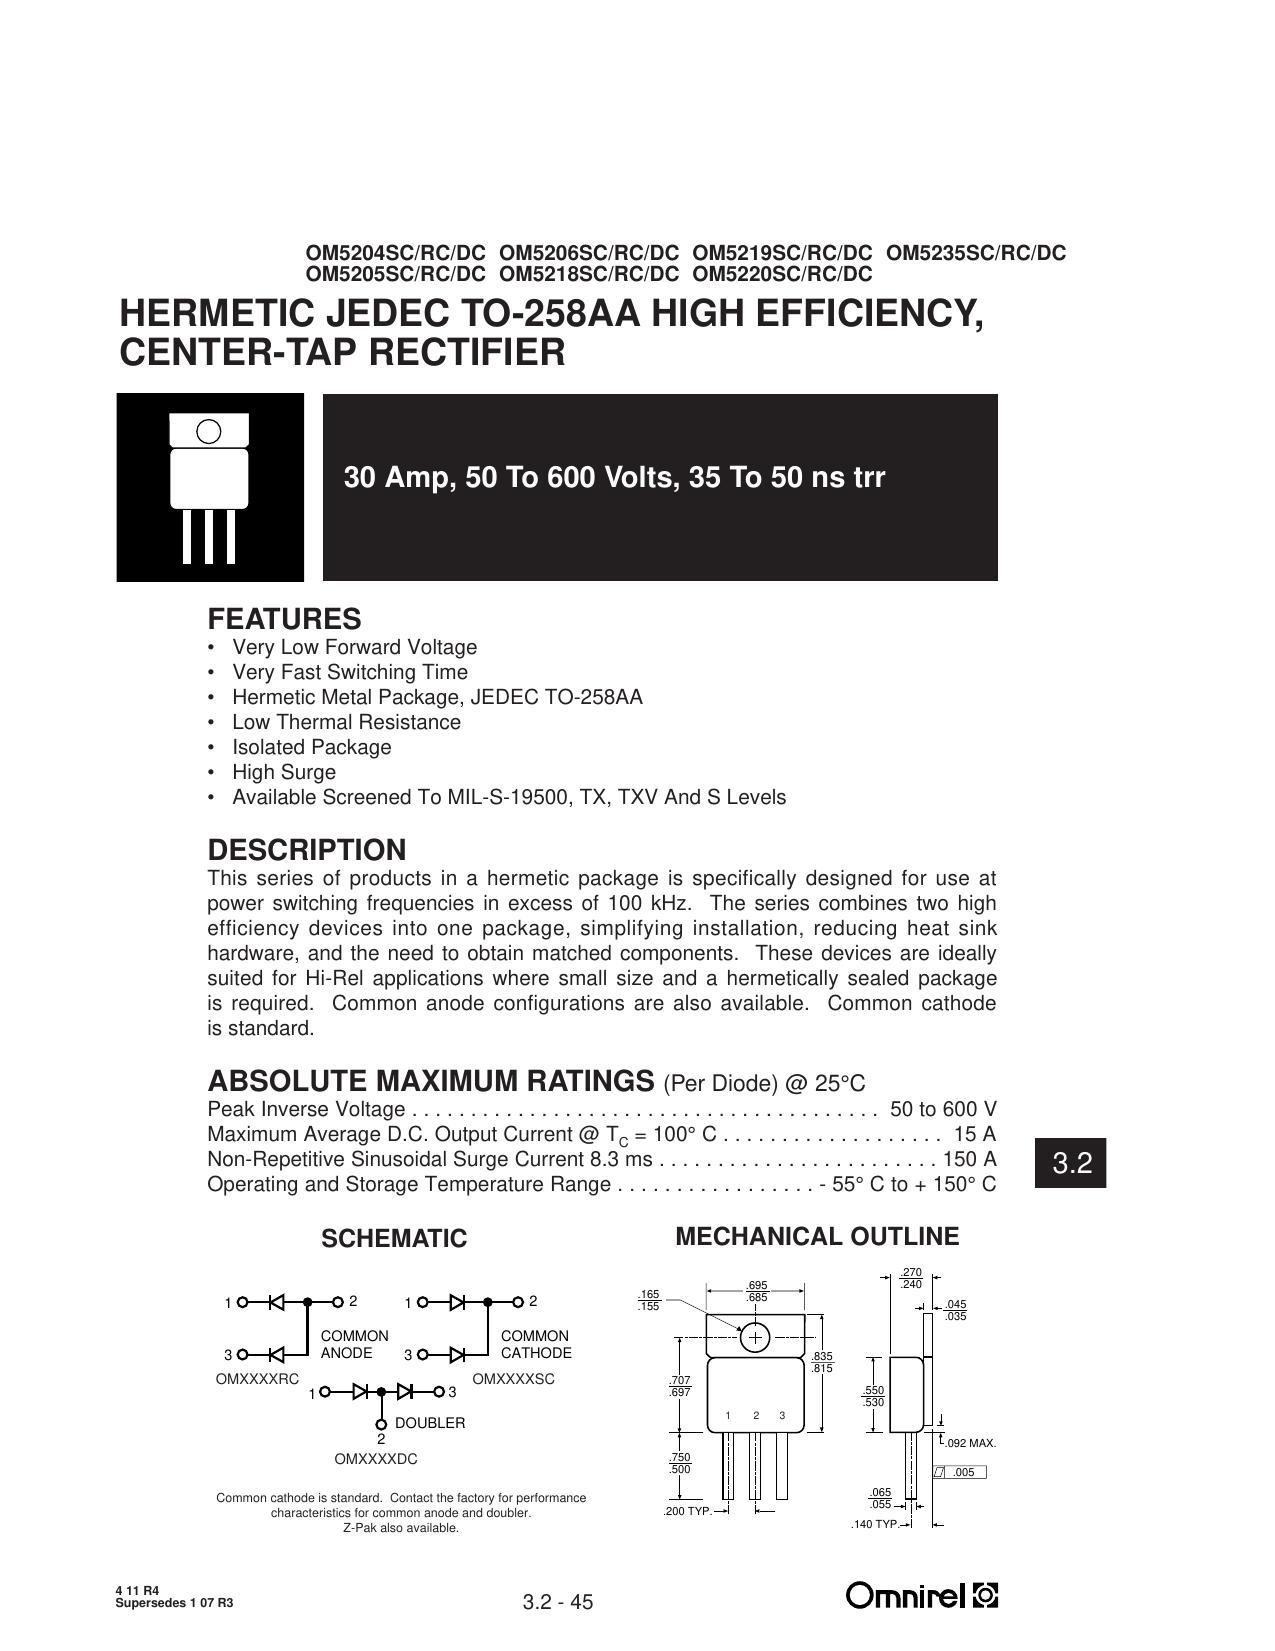 oms2xxom52xx-hermetic-jedec-to-258aa-high-efficiency-center-tap-rectifiers.pdf